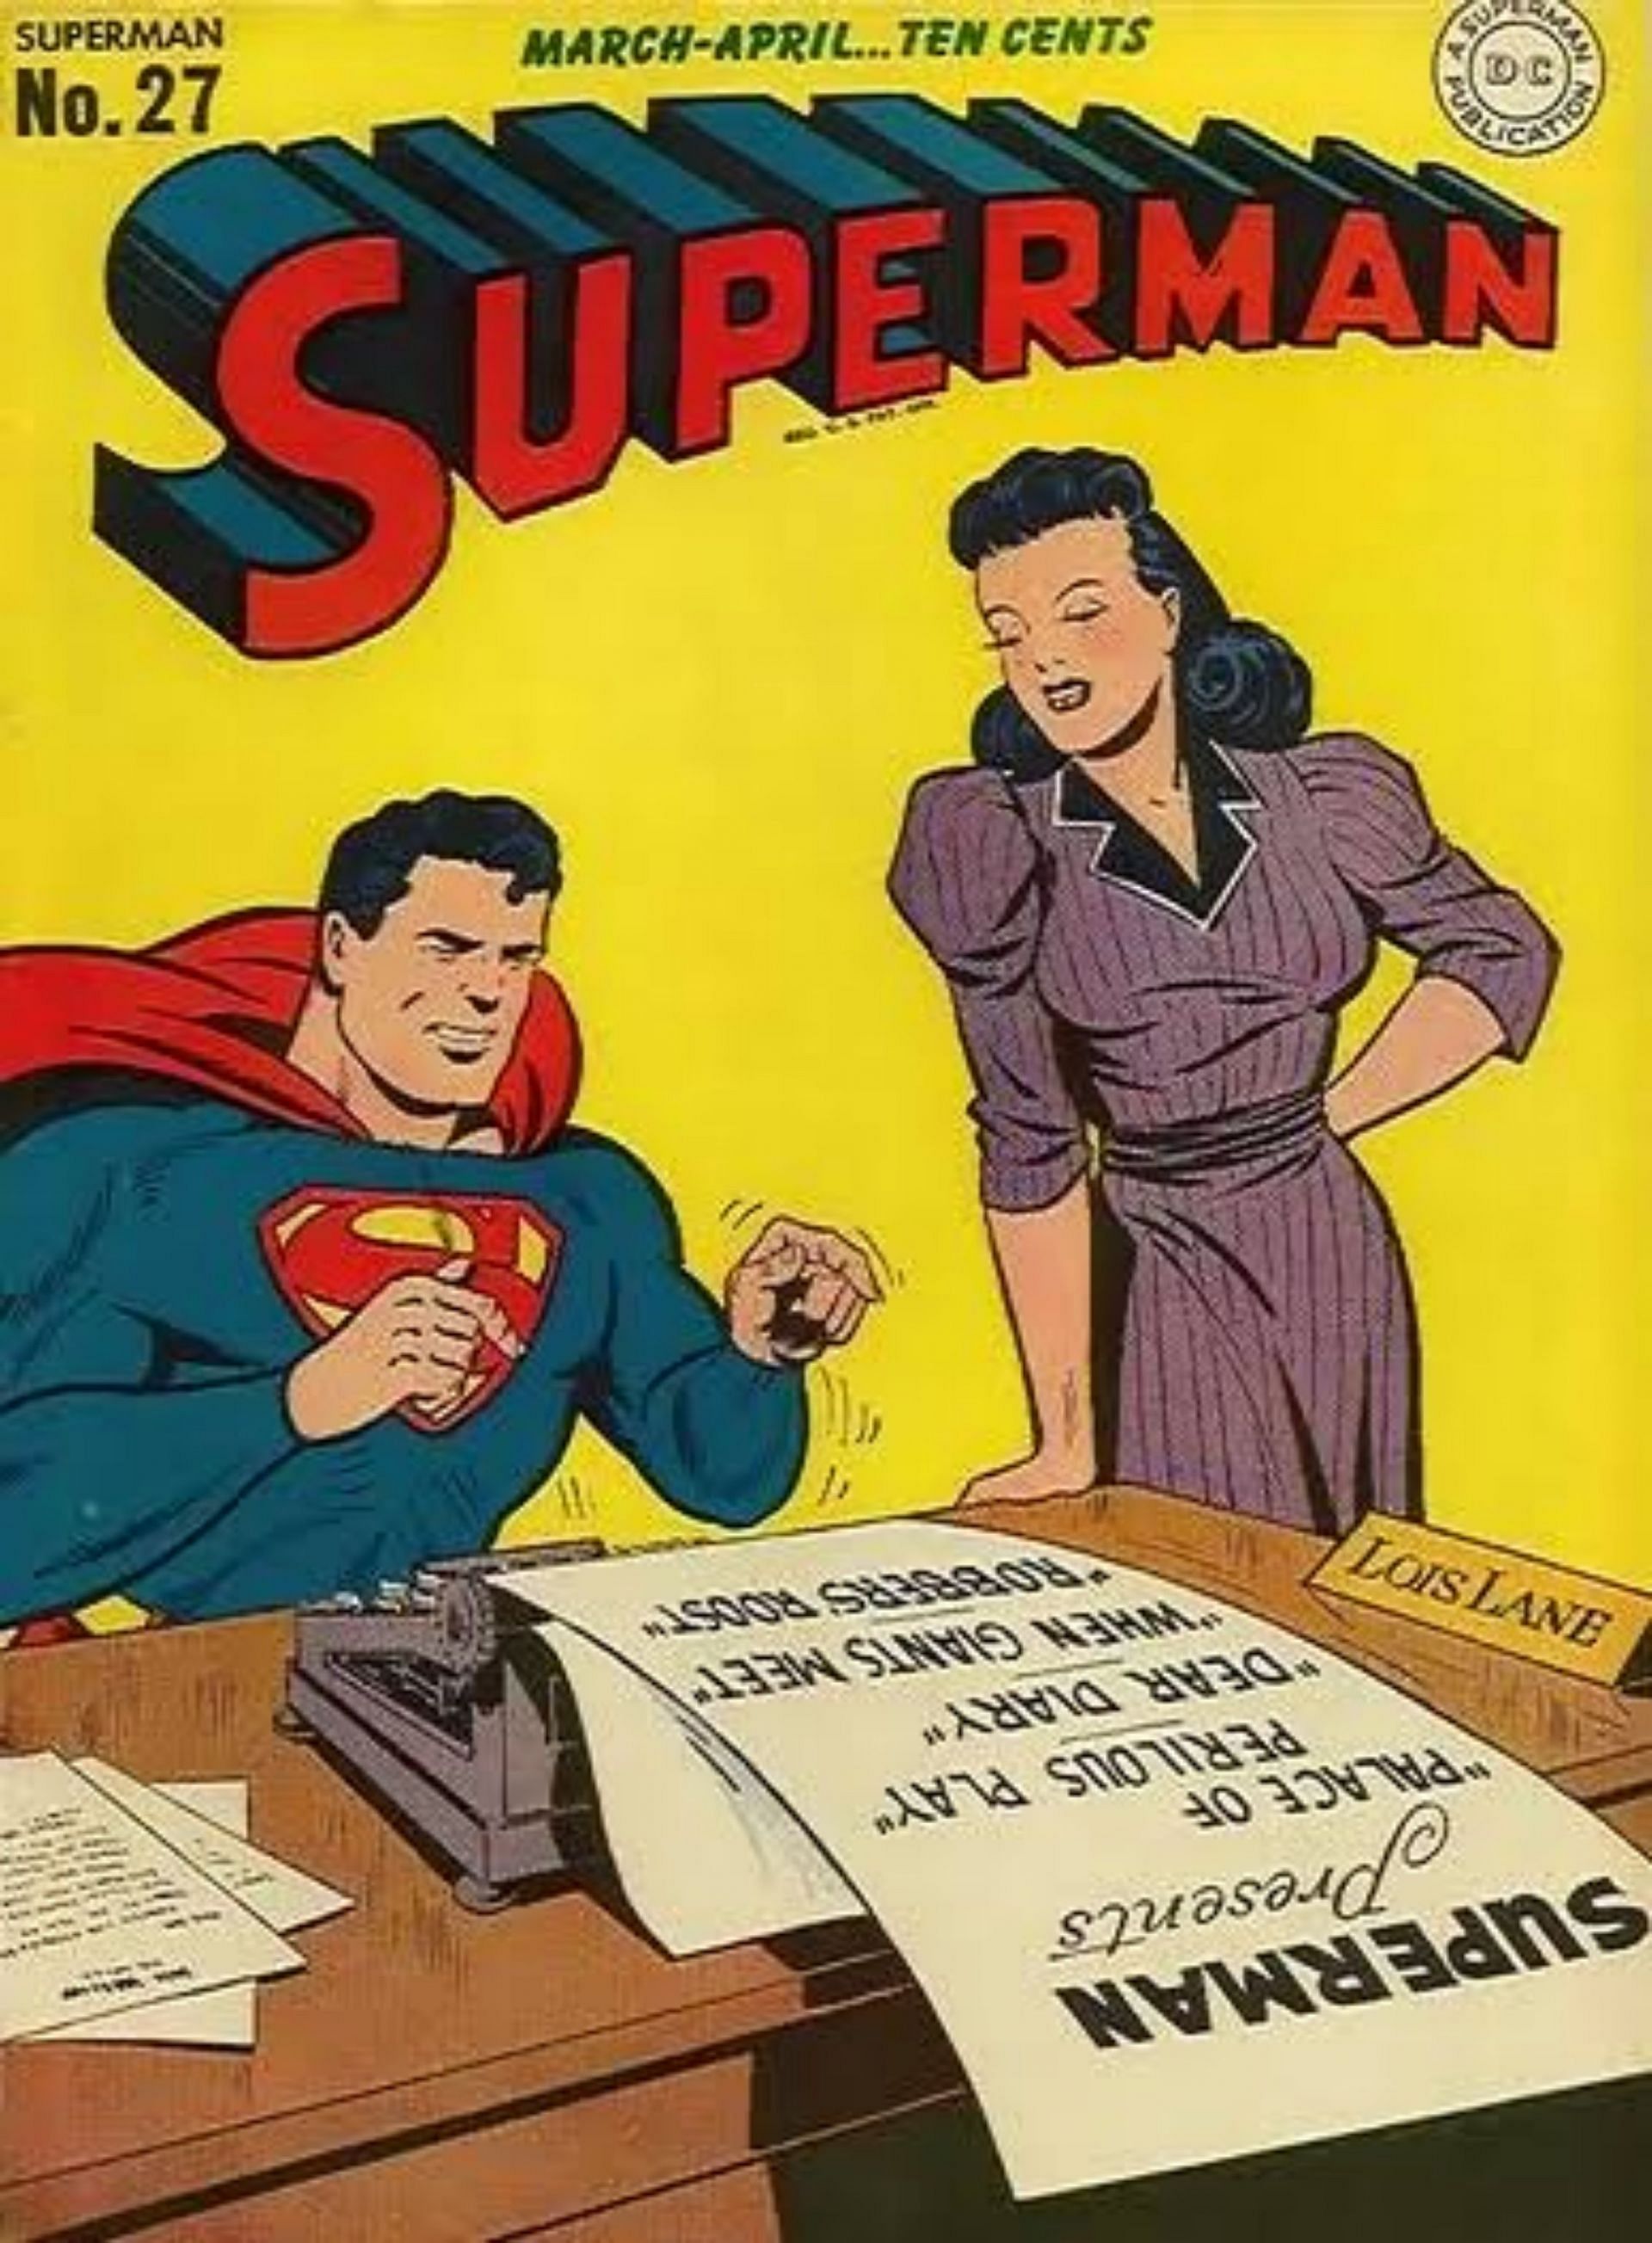 Kal-El and Lois Lane (Image via DC Comics)